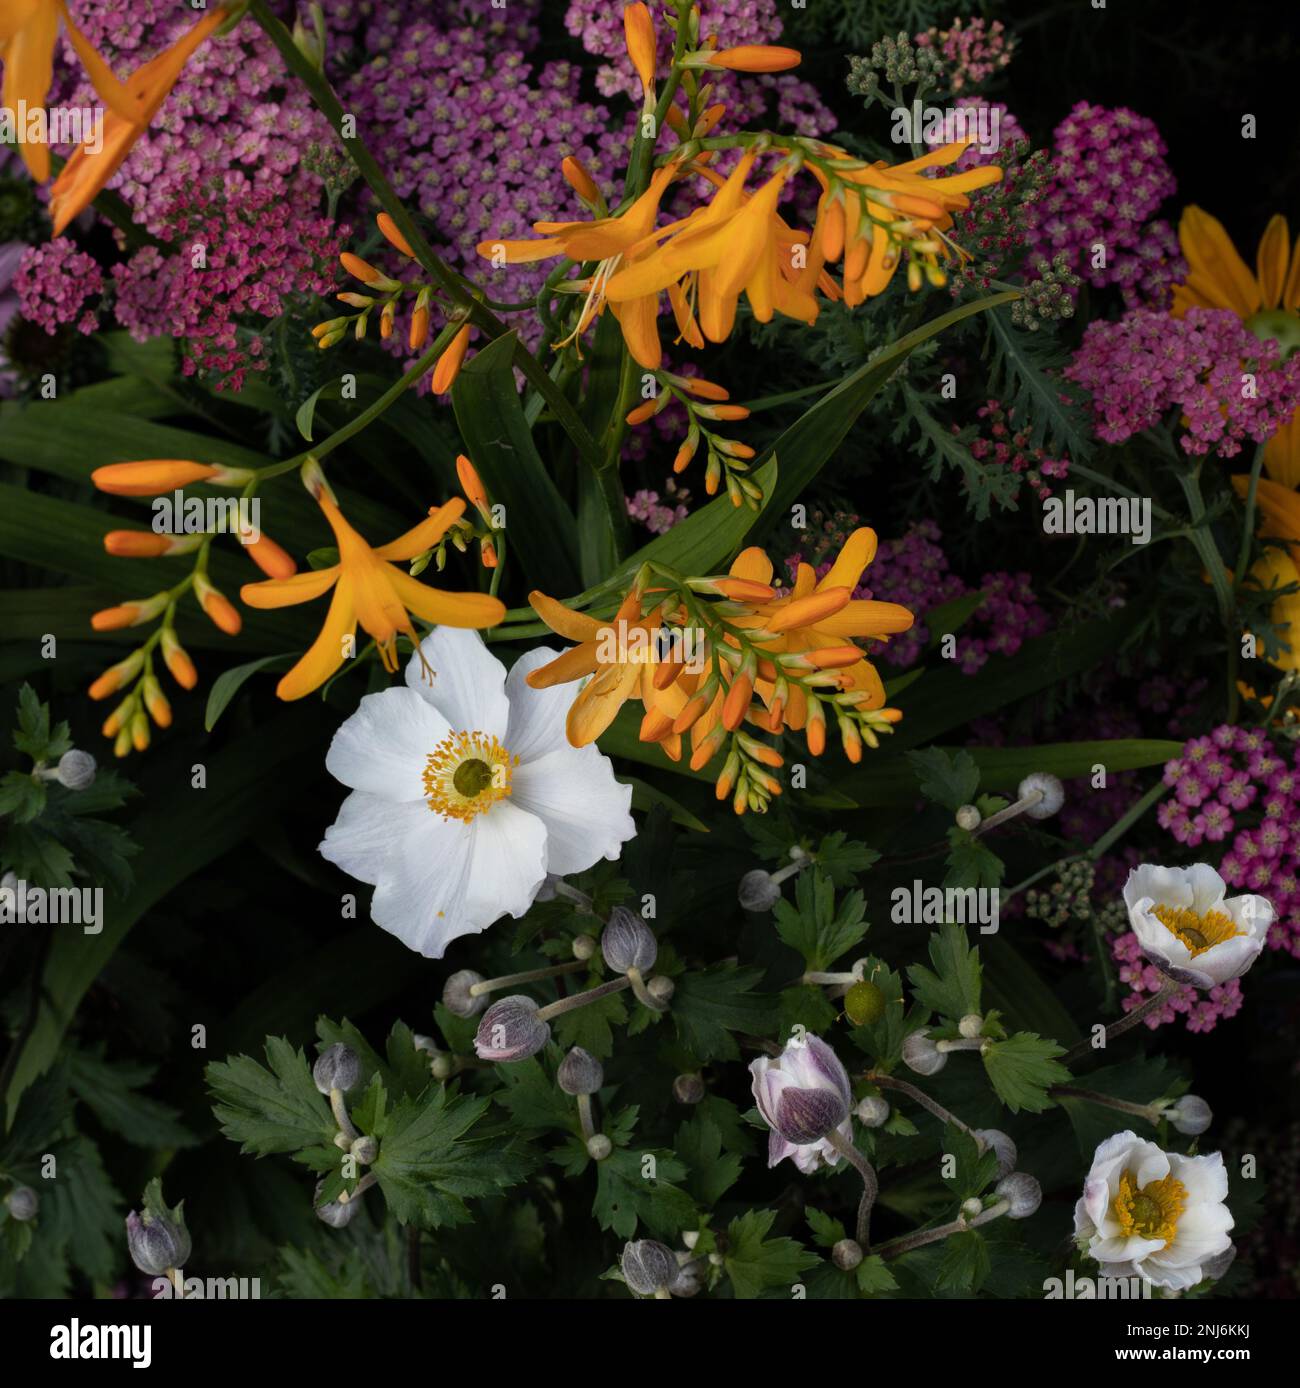 White, orange, pink flowers. White anemone flowers and buds, orange freesia flowers and buds, pink flowering shrubs, green foliage, black background. Stock Photo